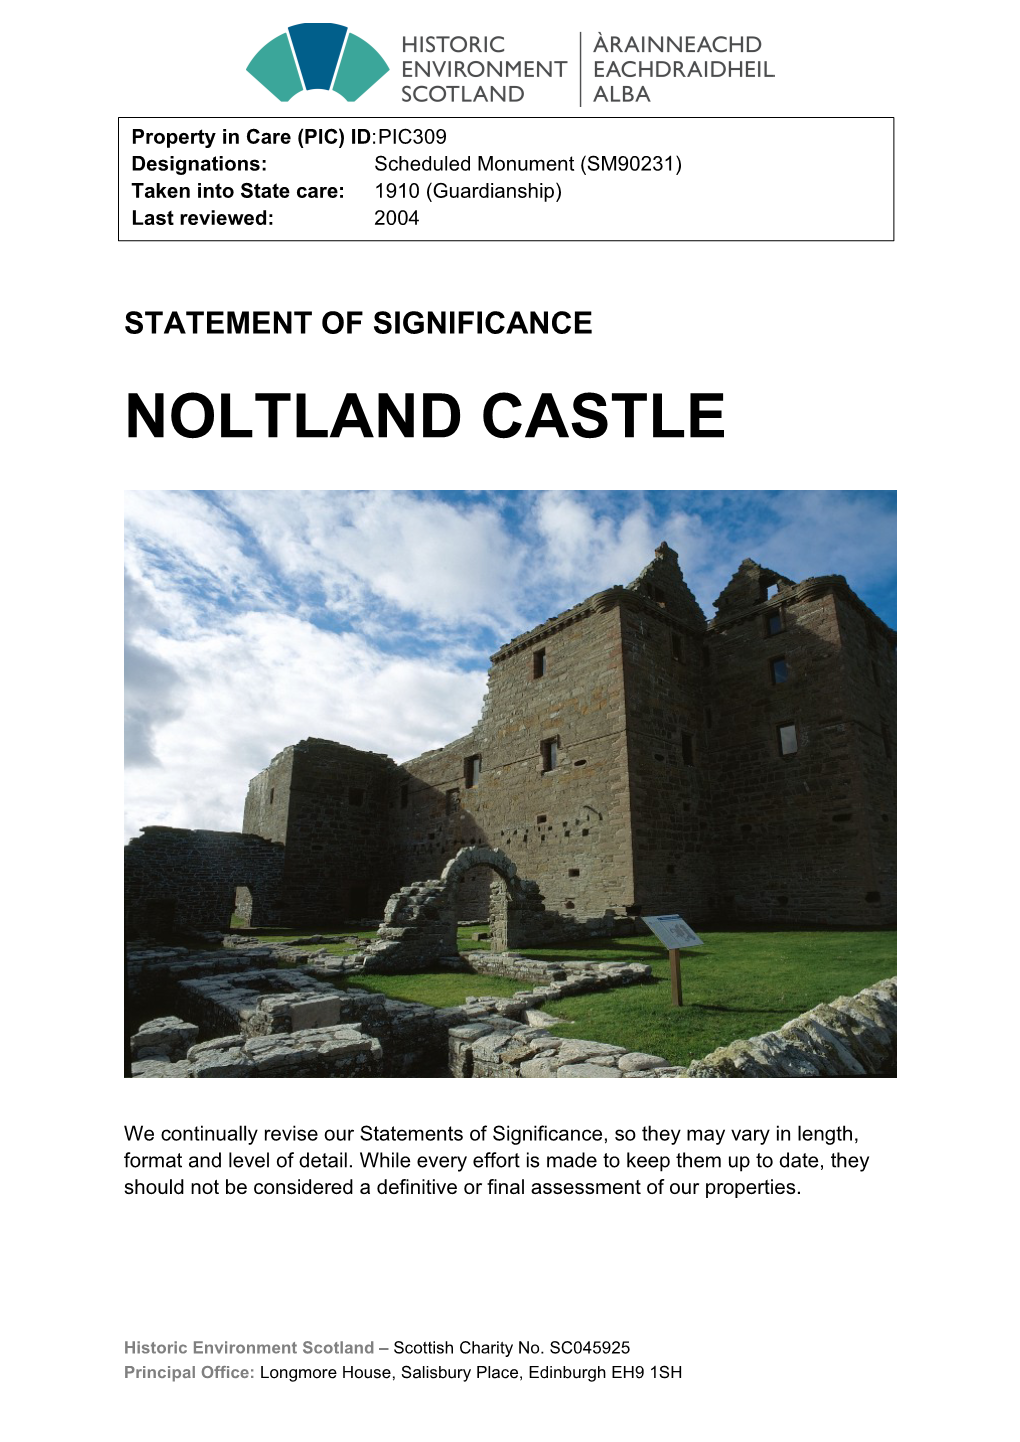 Noltland Castle Statement of Significance